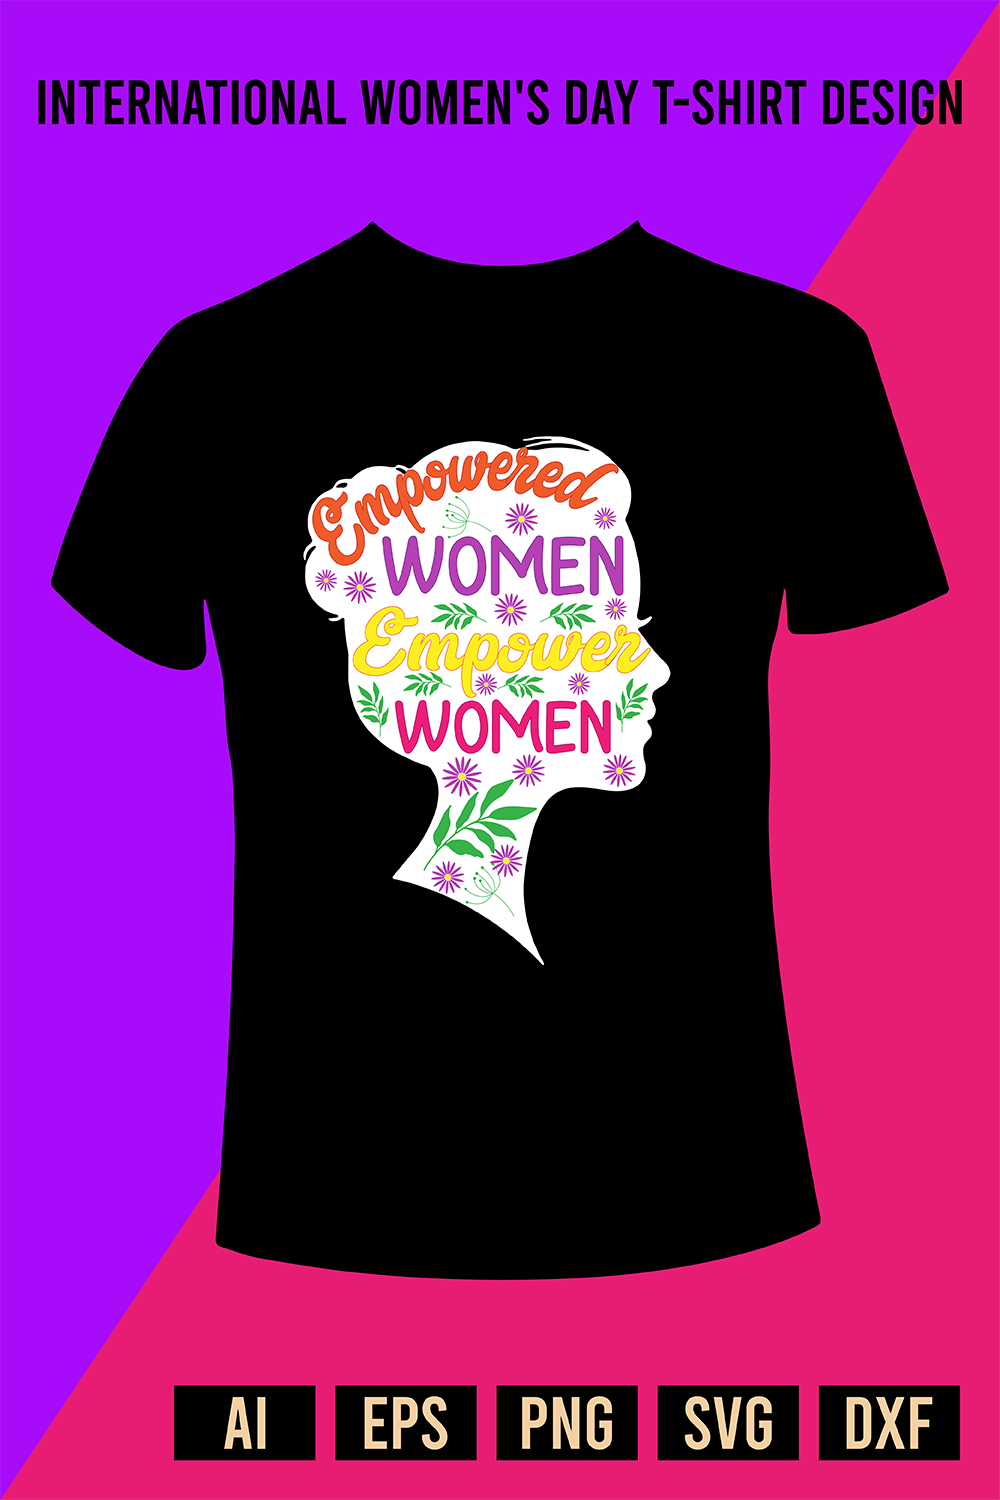 Empowered Women Empower T-Shirt Design pinterest preview image.